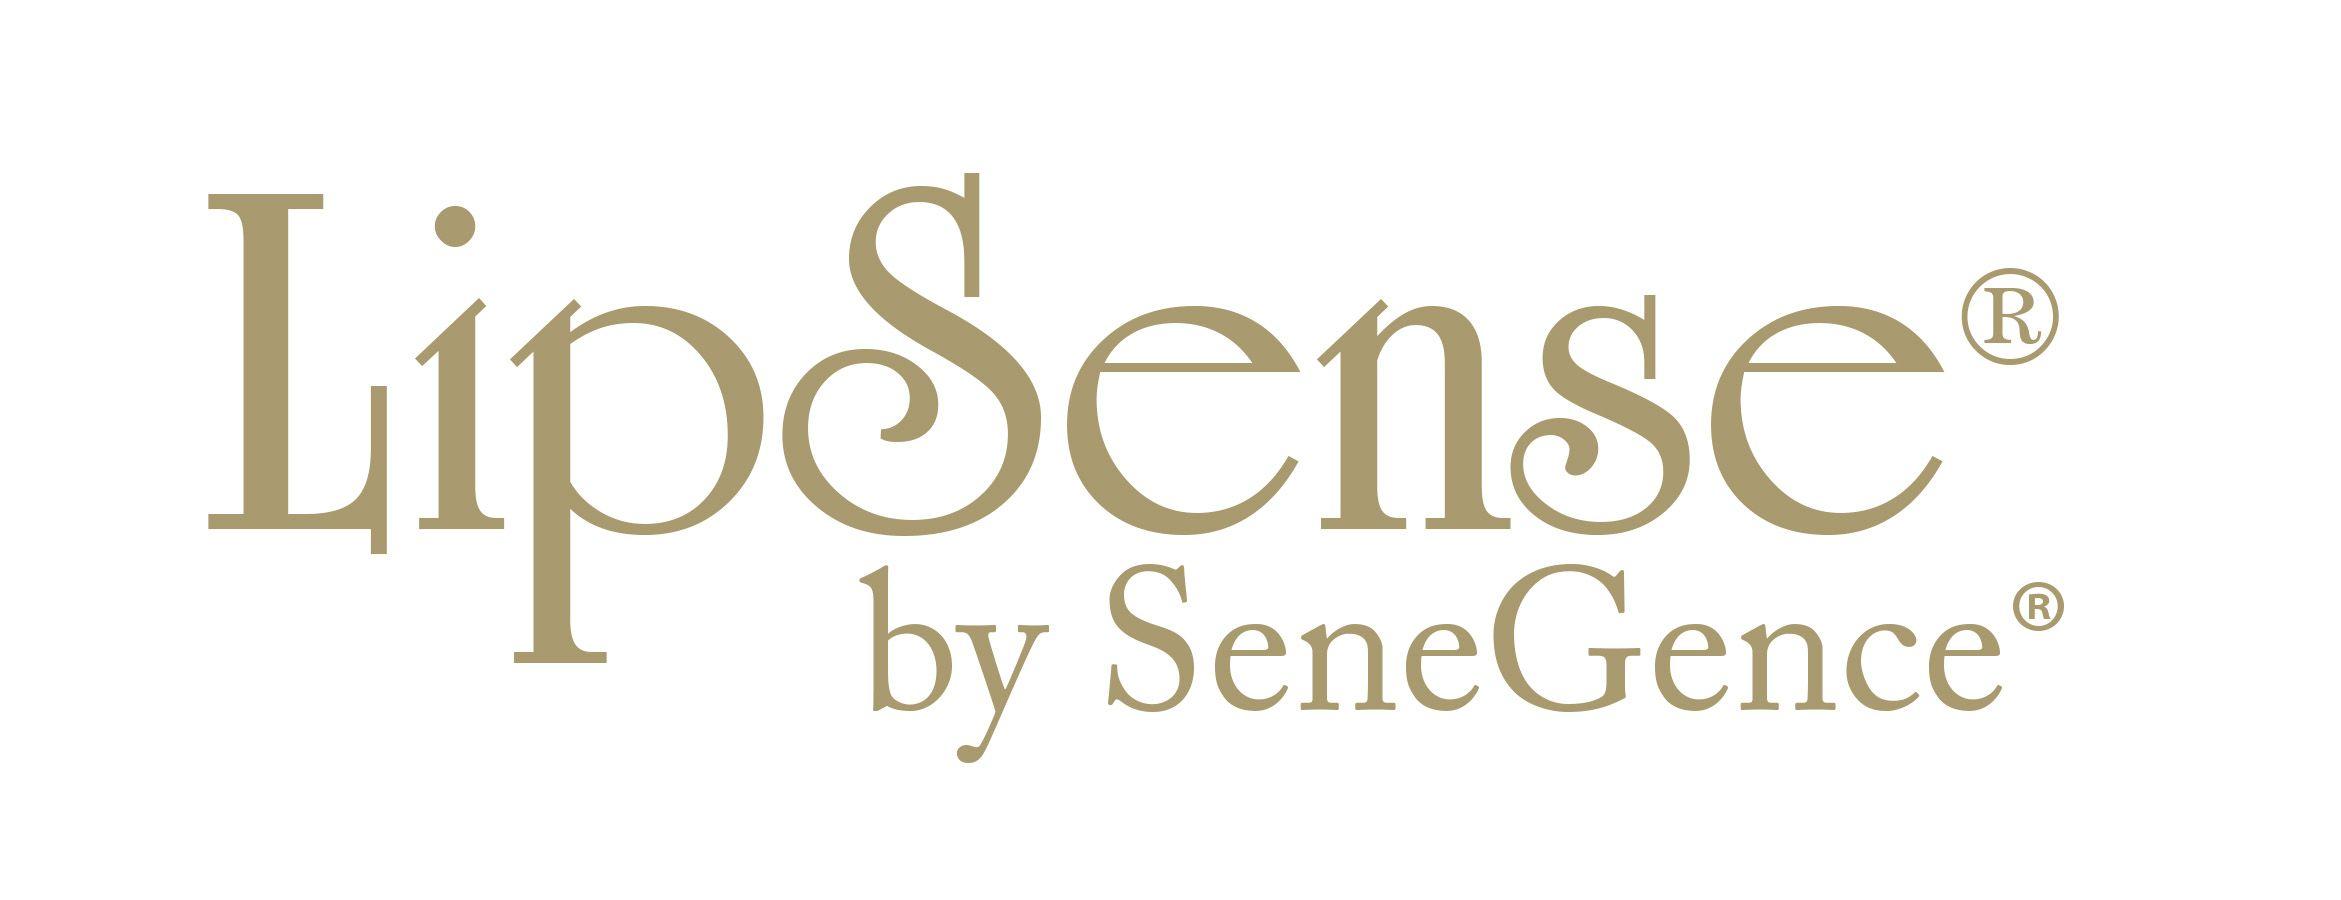 LipSense by SeneGence Logo - What Blasted Font is This? (LipSense) Identification